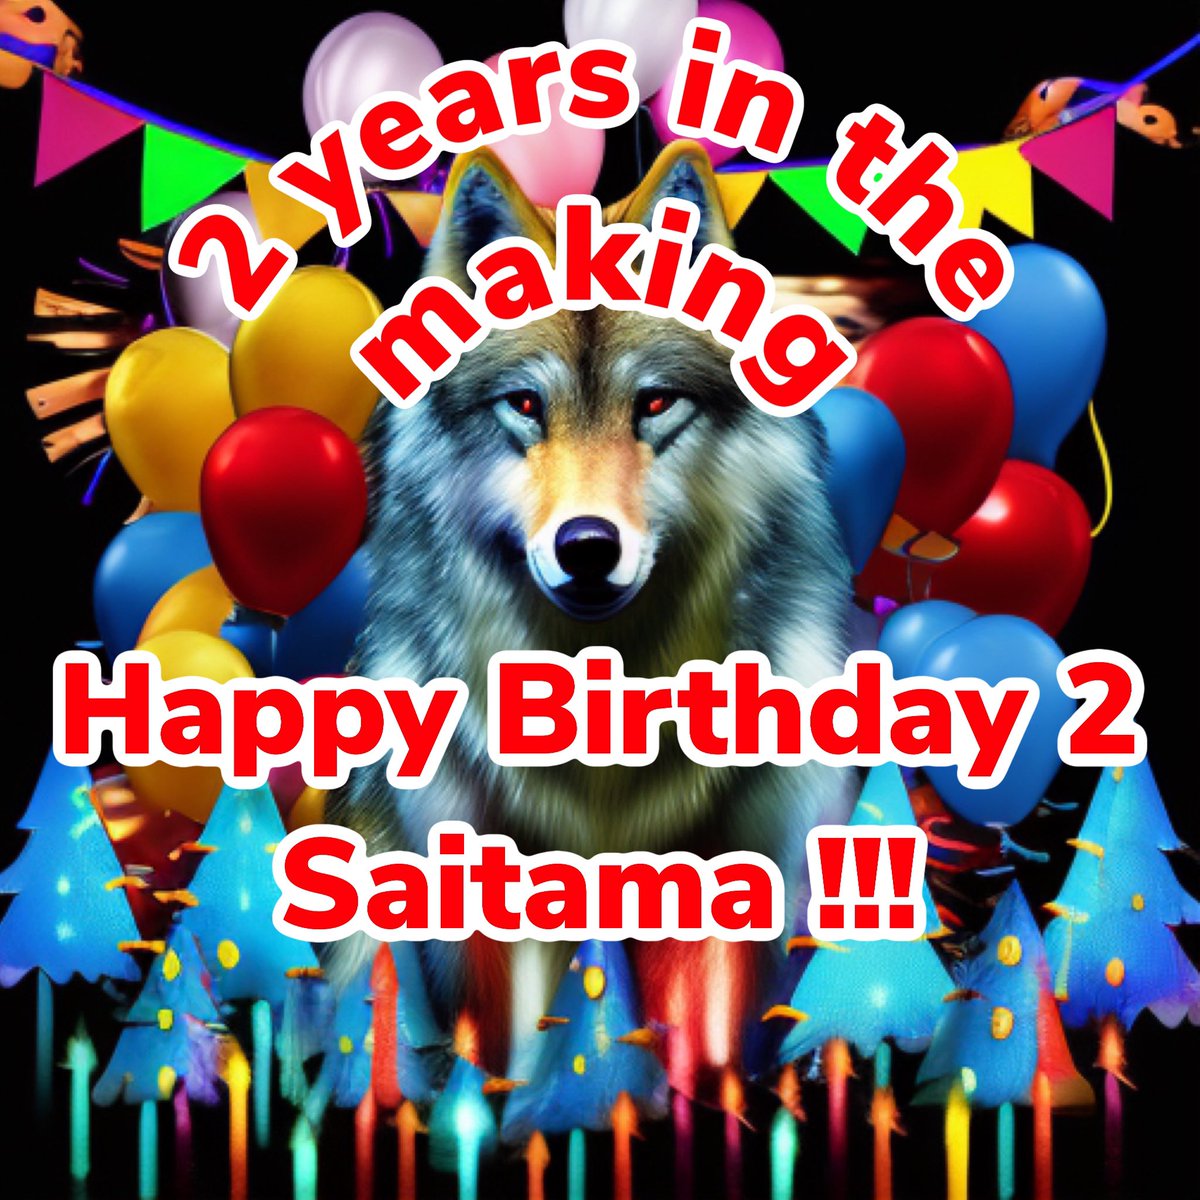 SaitamaToOneDollar ! 💵 2 years in the making. #Saitama #1Community #SaitaPro #Saitaswap #SaitaRealty #Saitalogistics  #SaitaChain #SaitaCard #SaitaAcademy #FANG #Wolfcaster #SaitaCity #Web3 #DeFi #Crypto #BTC  #BlockChain #AI #SaitamaToOneDollar 🎉🎊🎂🎁🚀🚀🚀🚨#Saitama🚨🚀🚀🚀